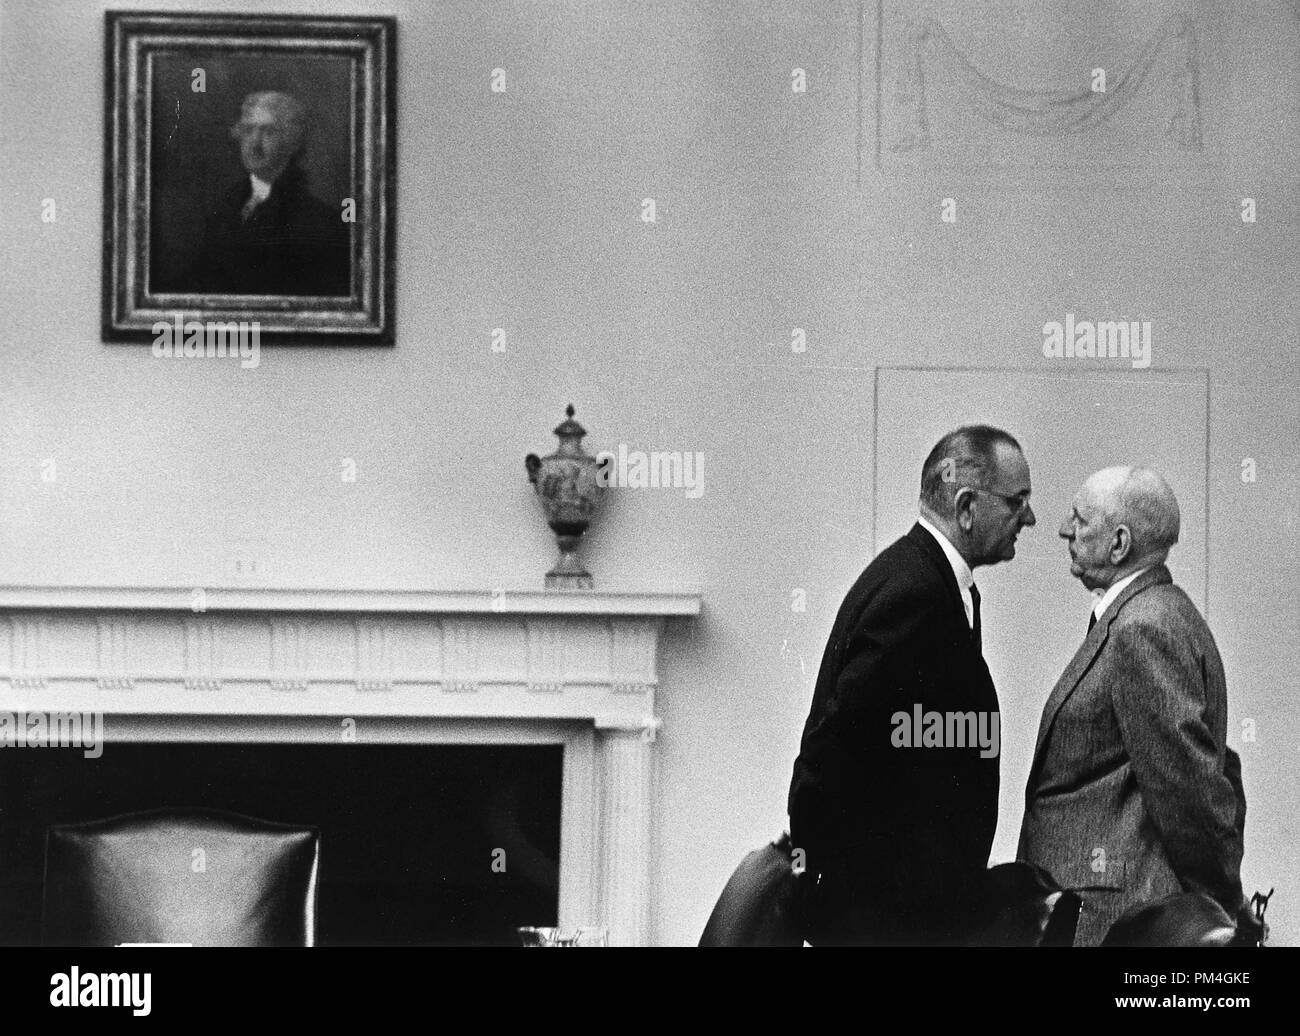 Präsident Lyndon Johnson mit Senator Richard Russell im Weißen Haus, Dezember 7, 1963, Washington, DC. Datei Referenz Nr. 1003 046 THA Stockfoto